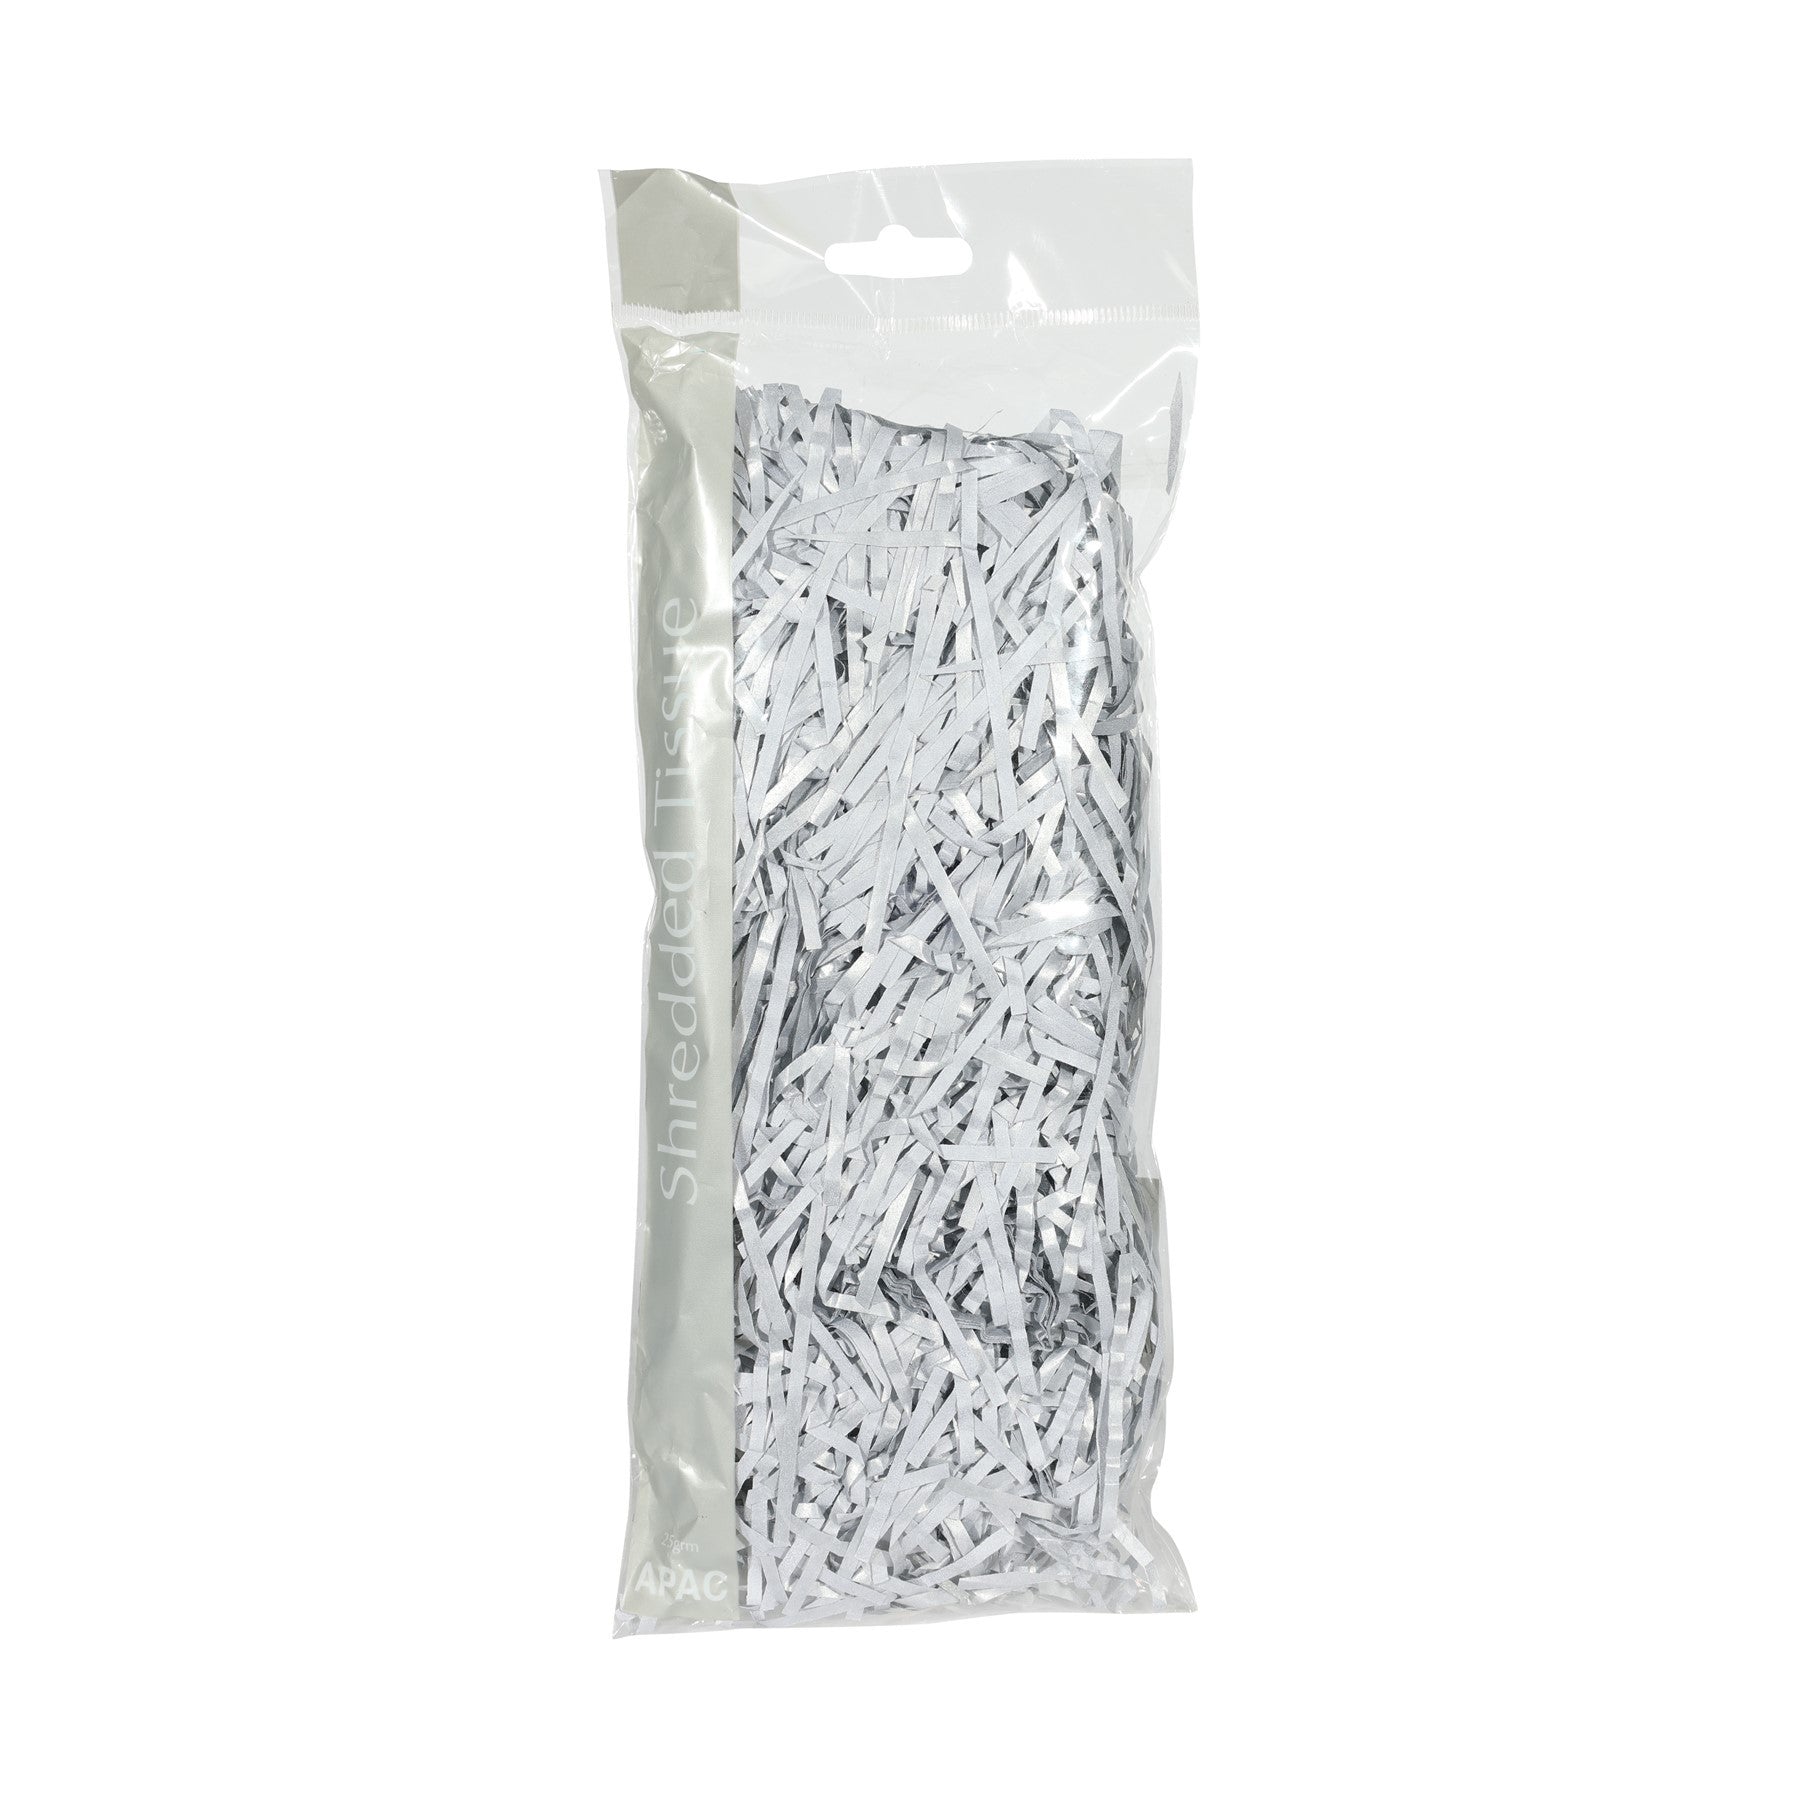 View Silver Shredded Tissue 25 grams information